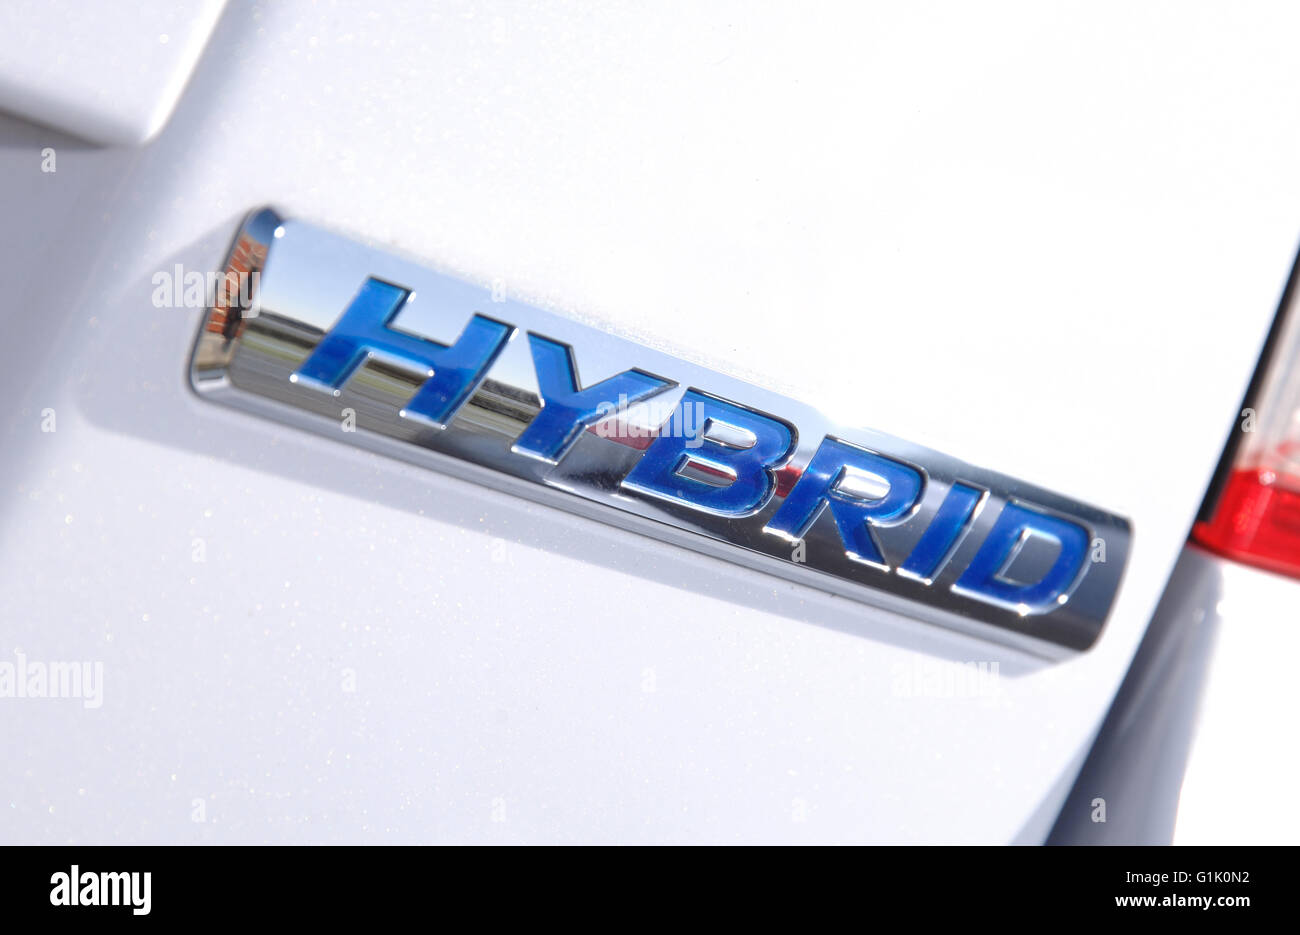 Hybrid badge on a 2009 Honda Insight hybrid family hatchback car Stock Photo